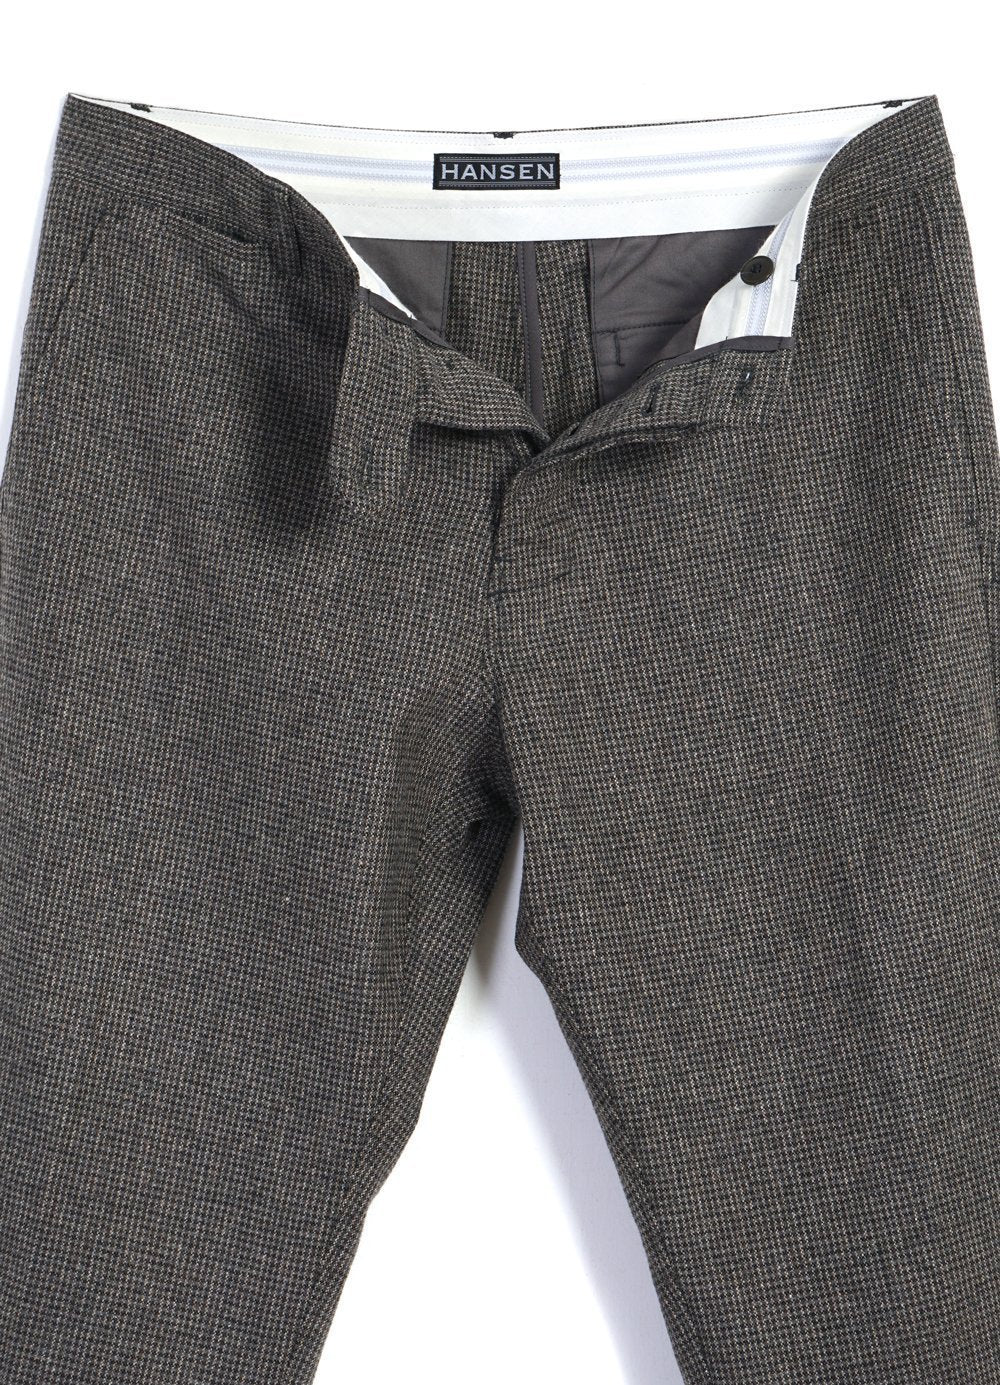 HANSEN GARMENTS - FRED | Regular Fit Trousers | Rocks - HANSEN Garments